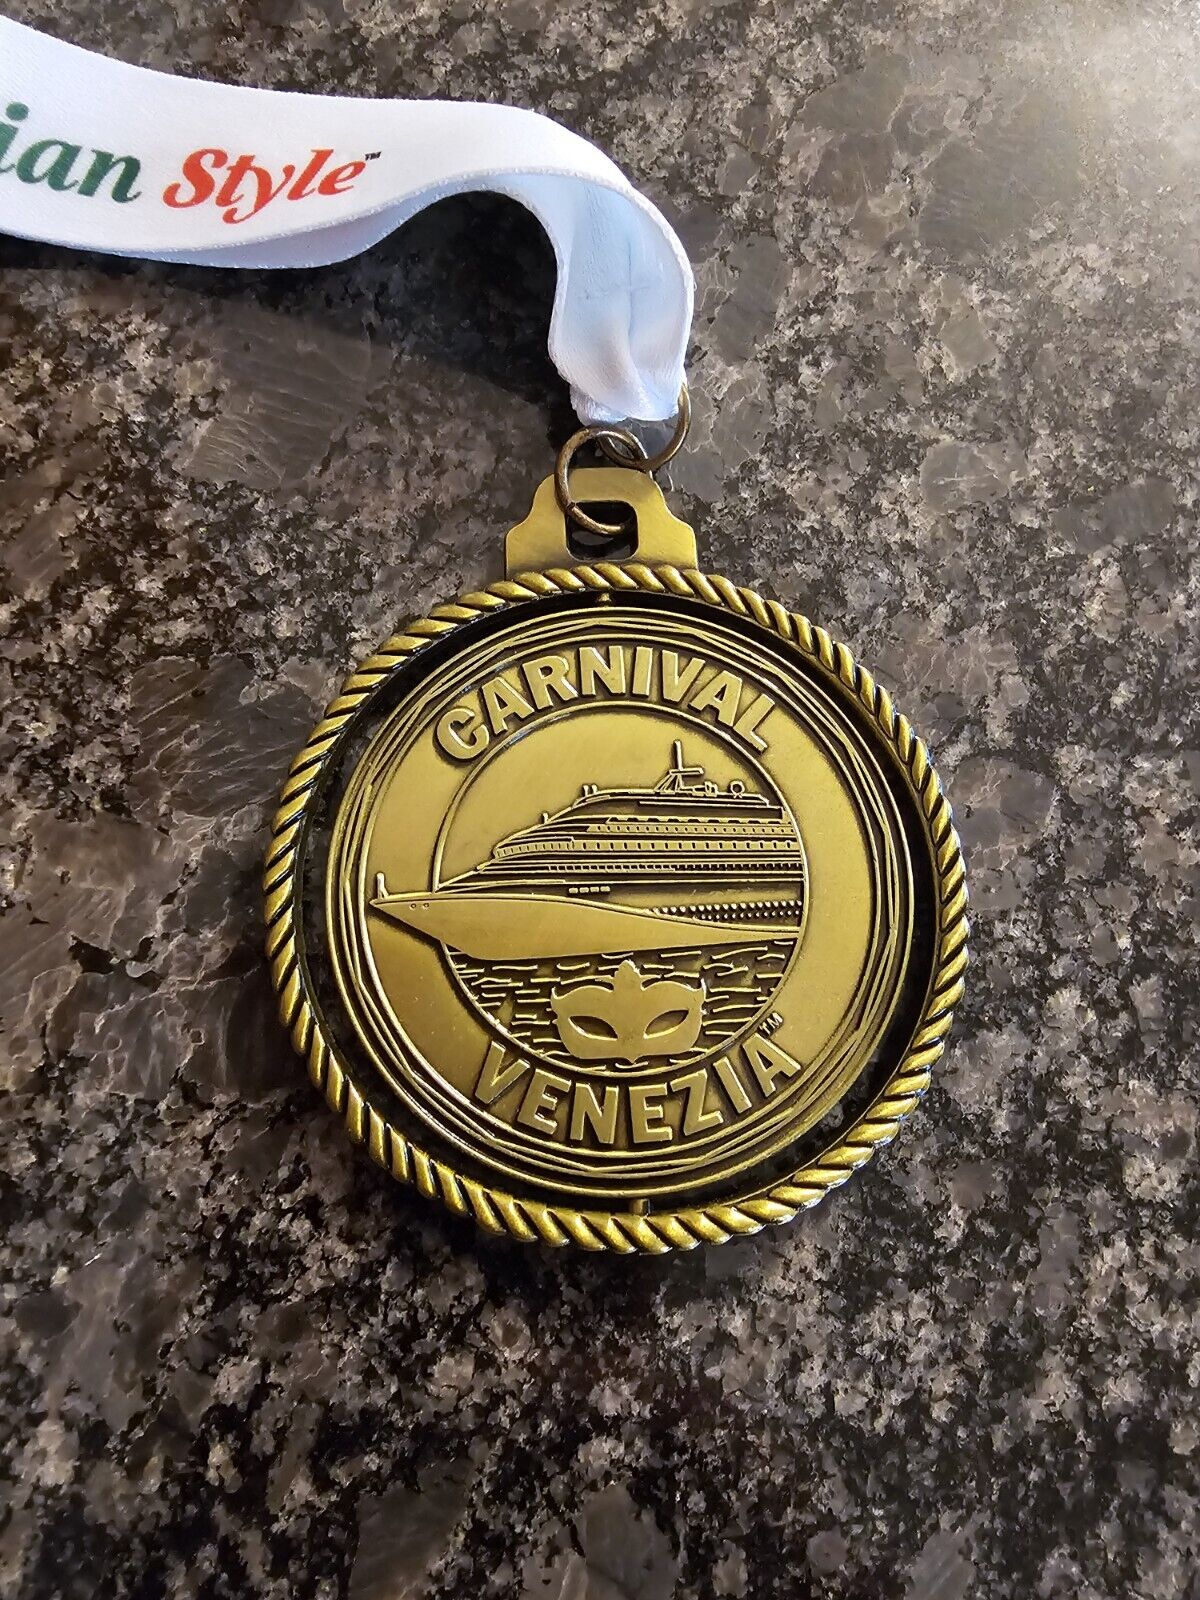 Carnival Cruise Line Venezia Award Medallion 